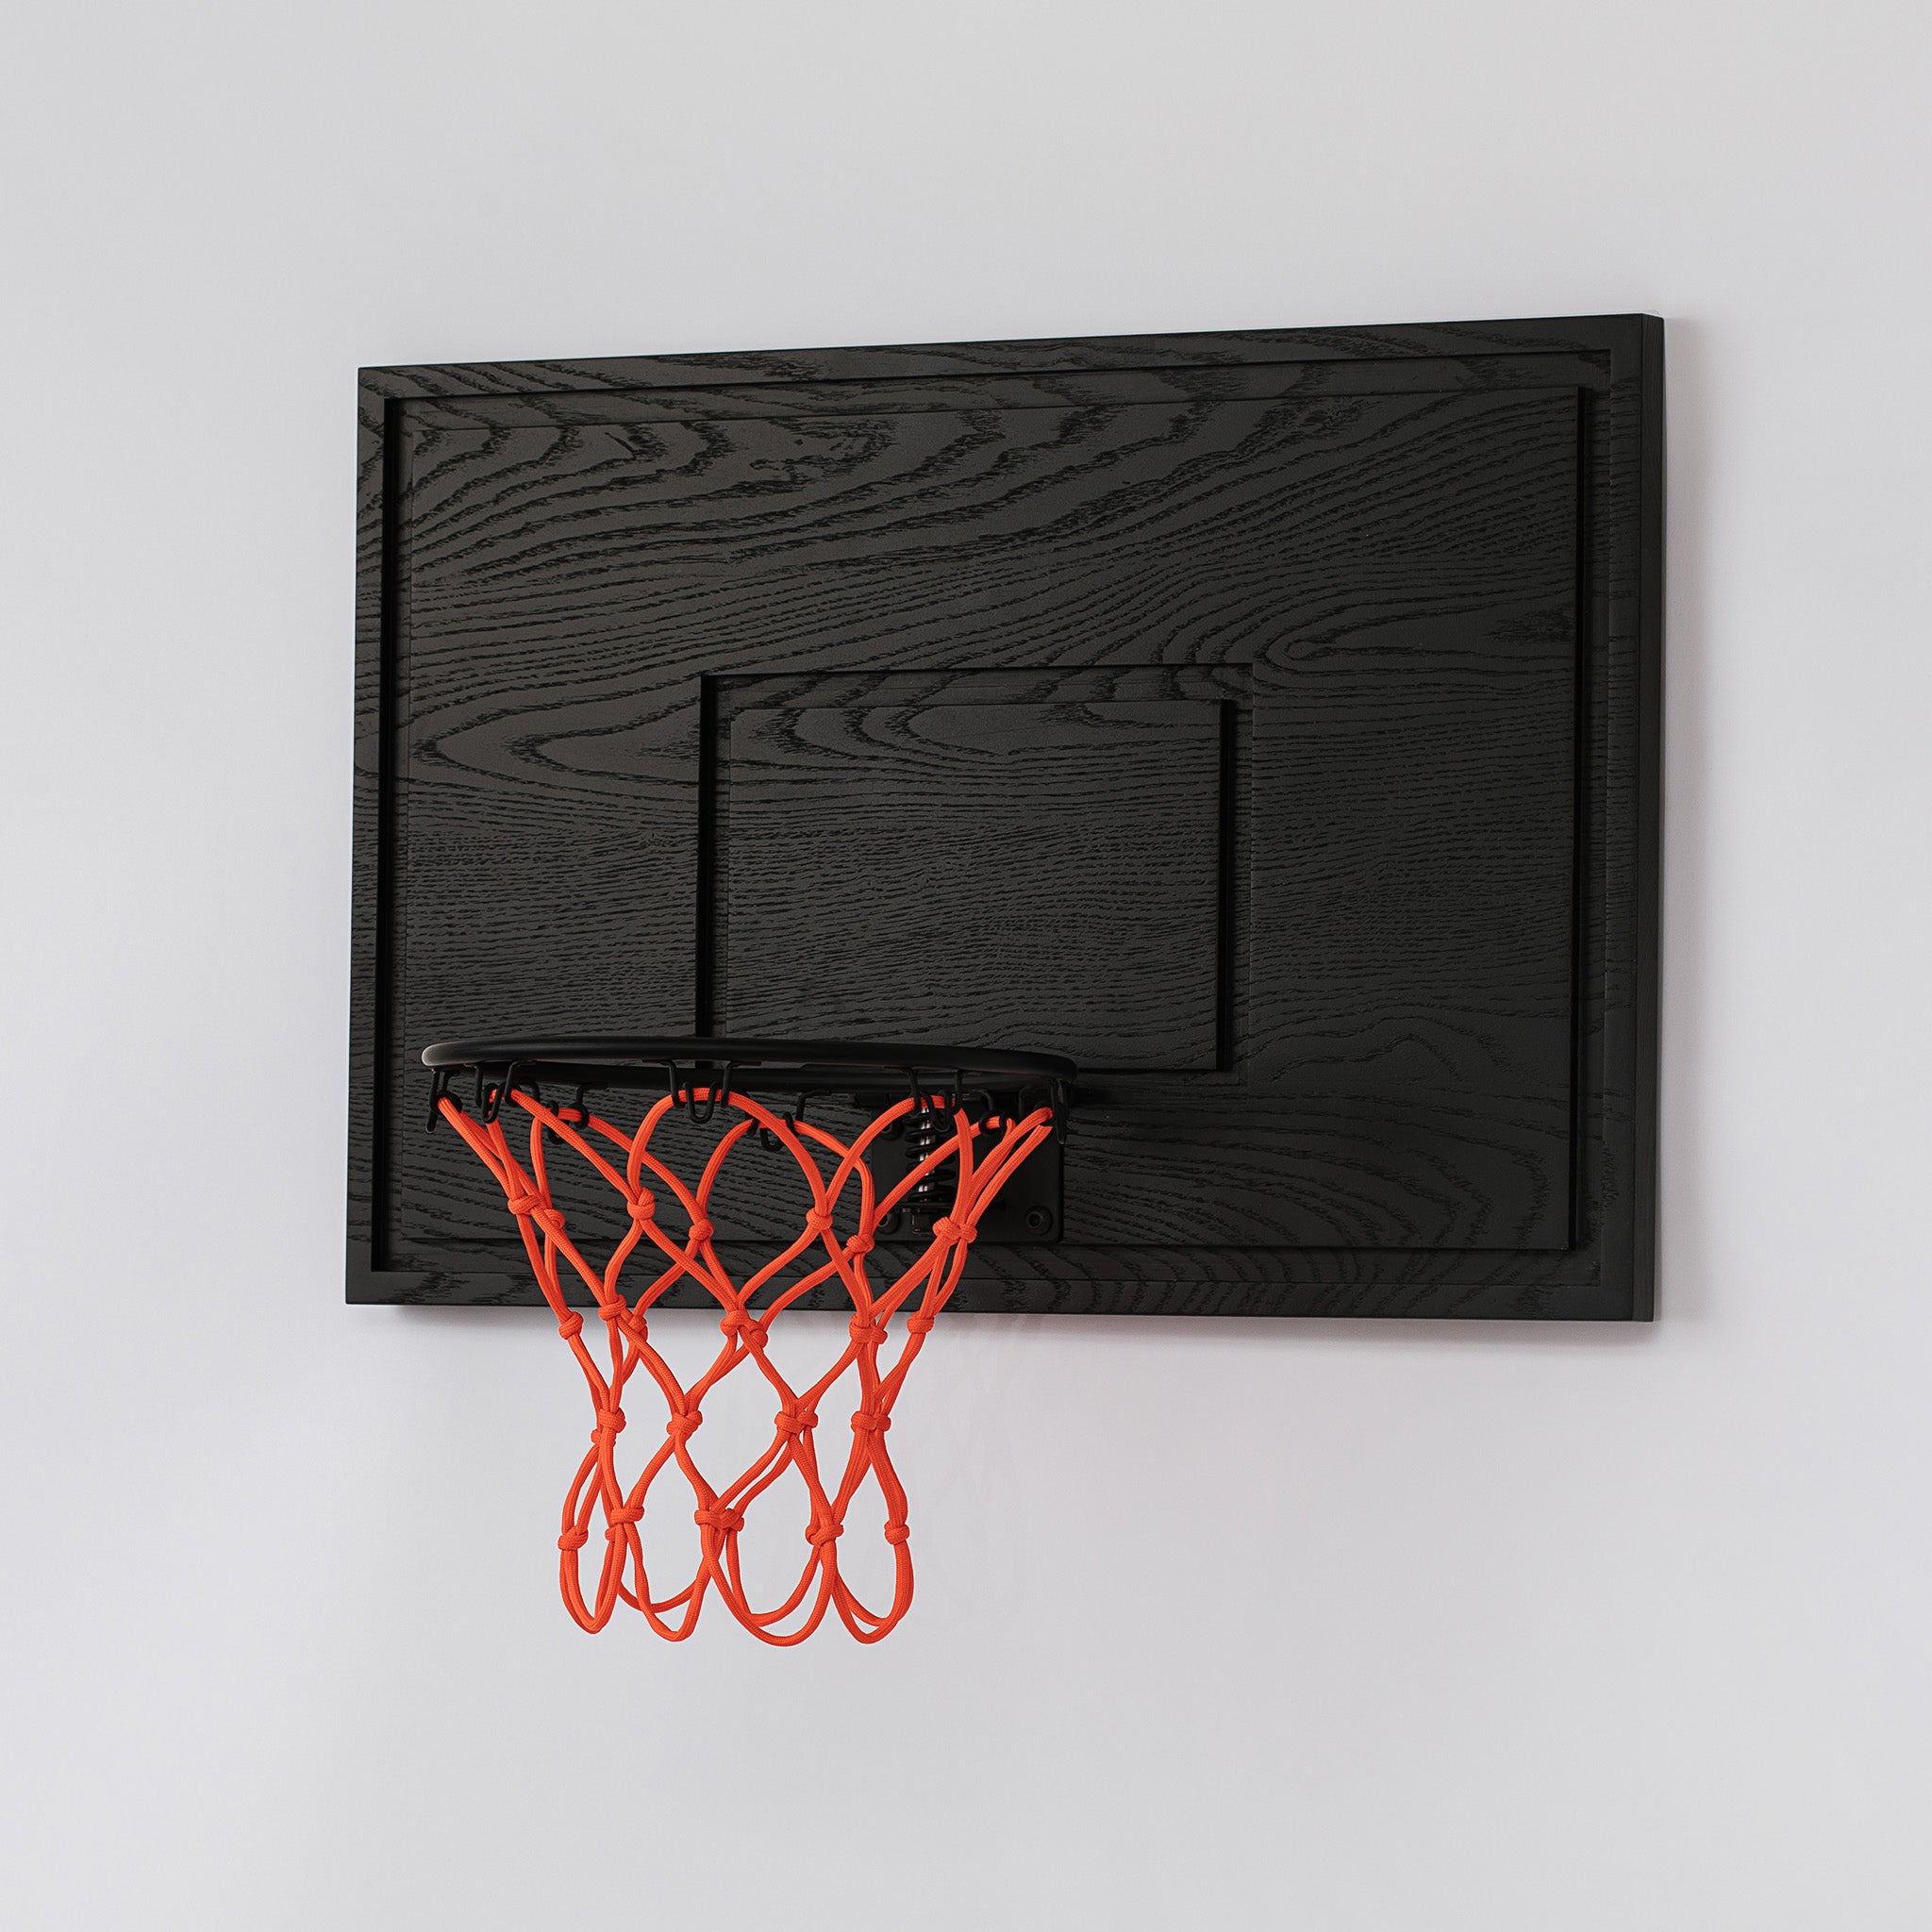 Wall Mounted Mini Basketball Hoop Backboard - Black